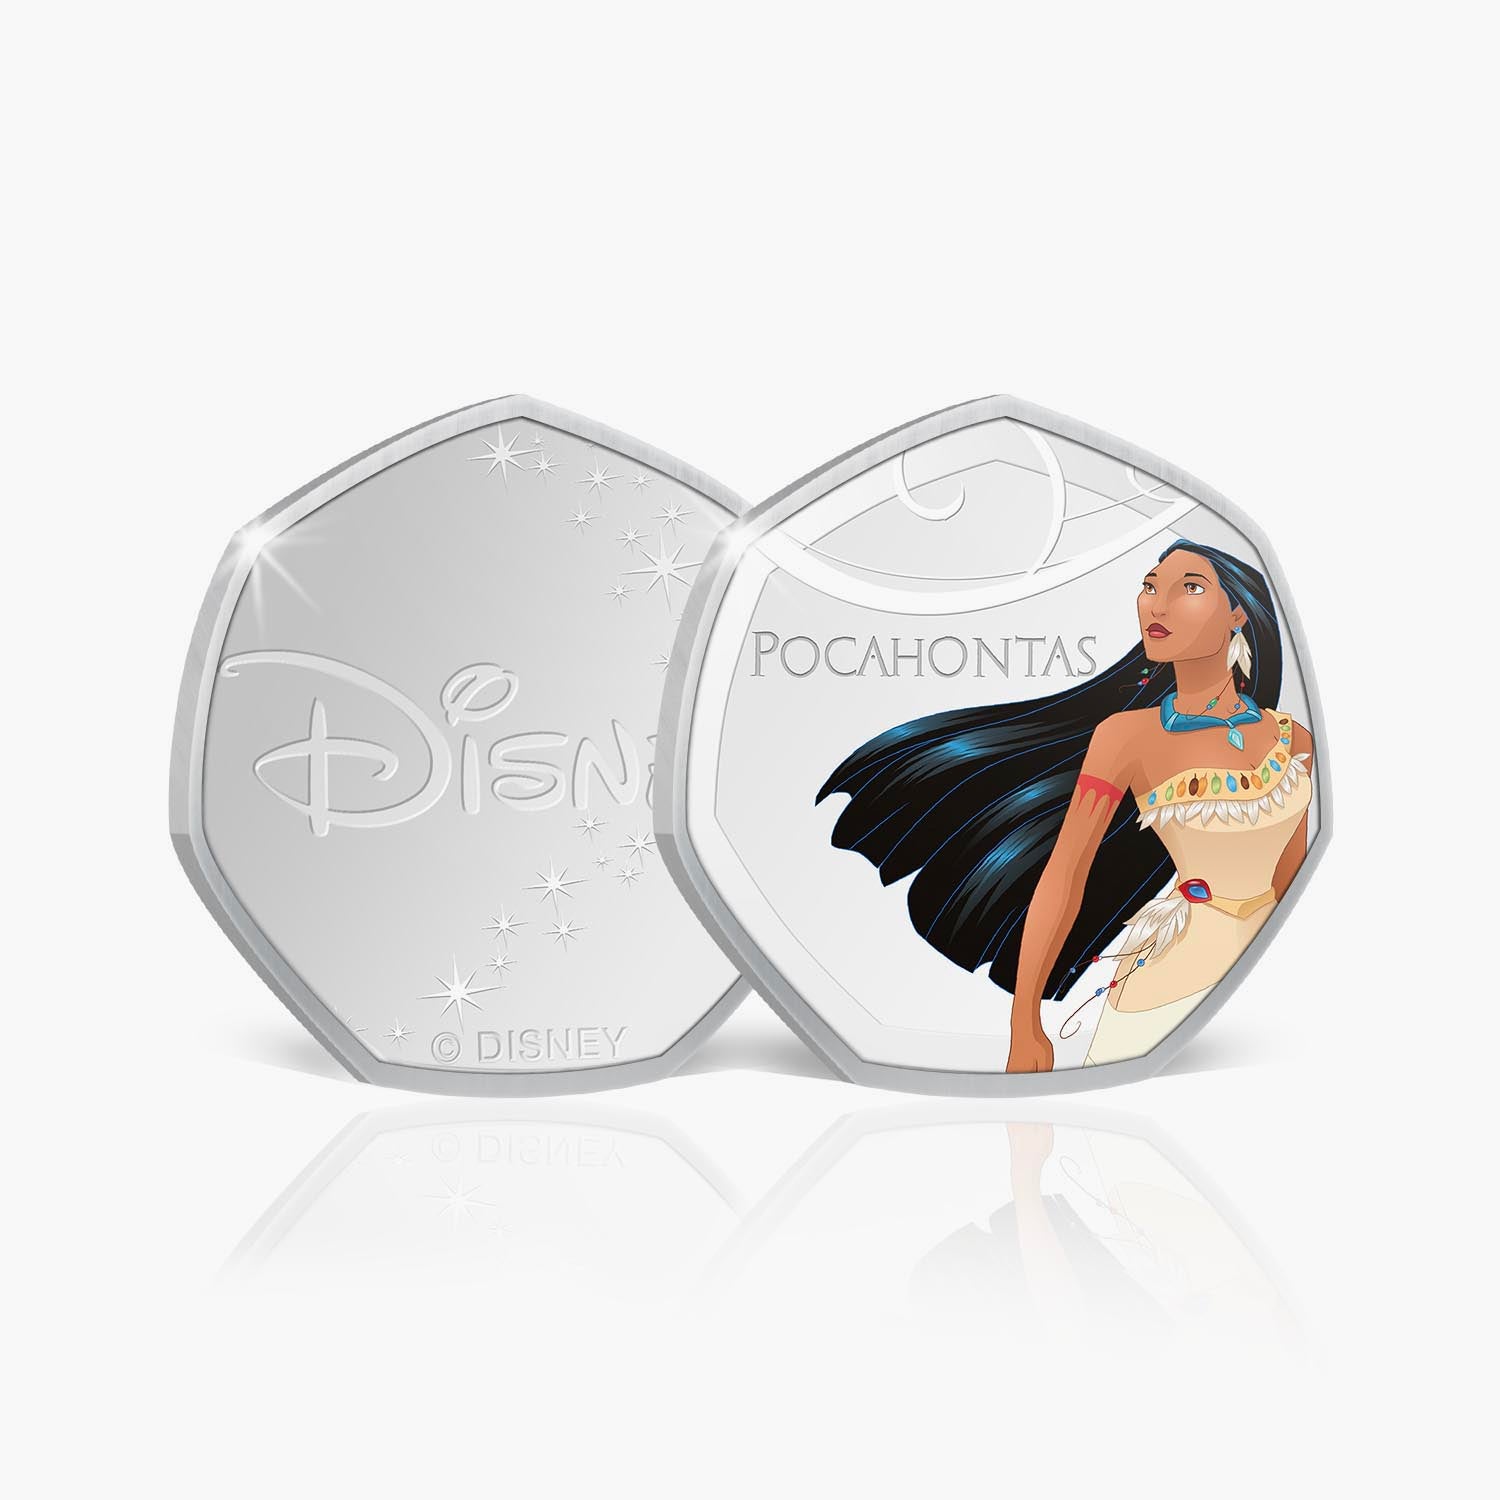 Pocahontas Silver-Plated Commemorative